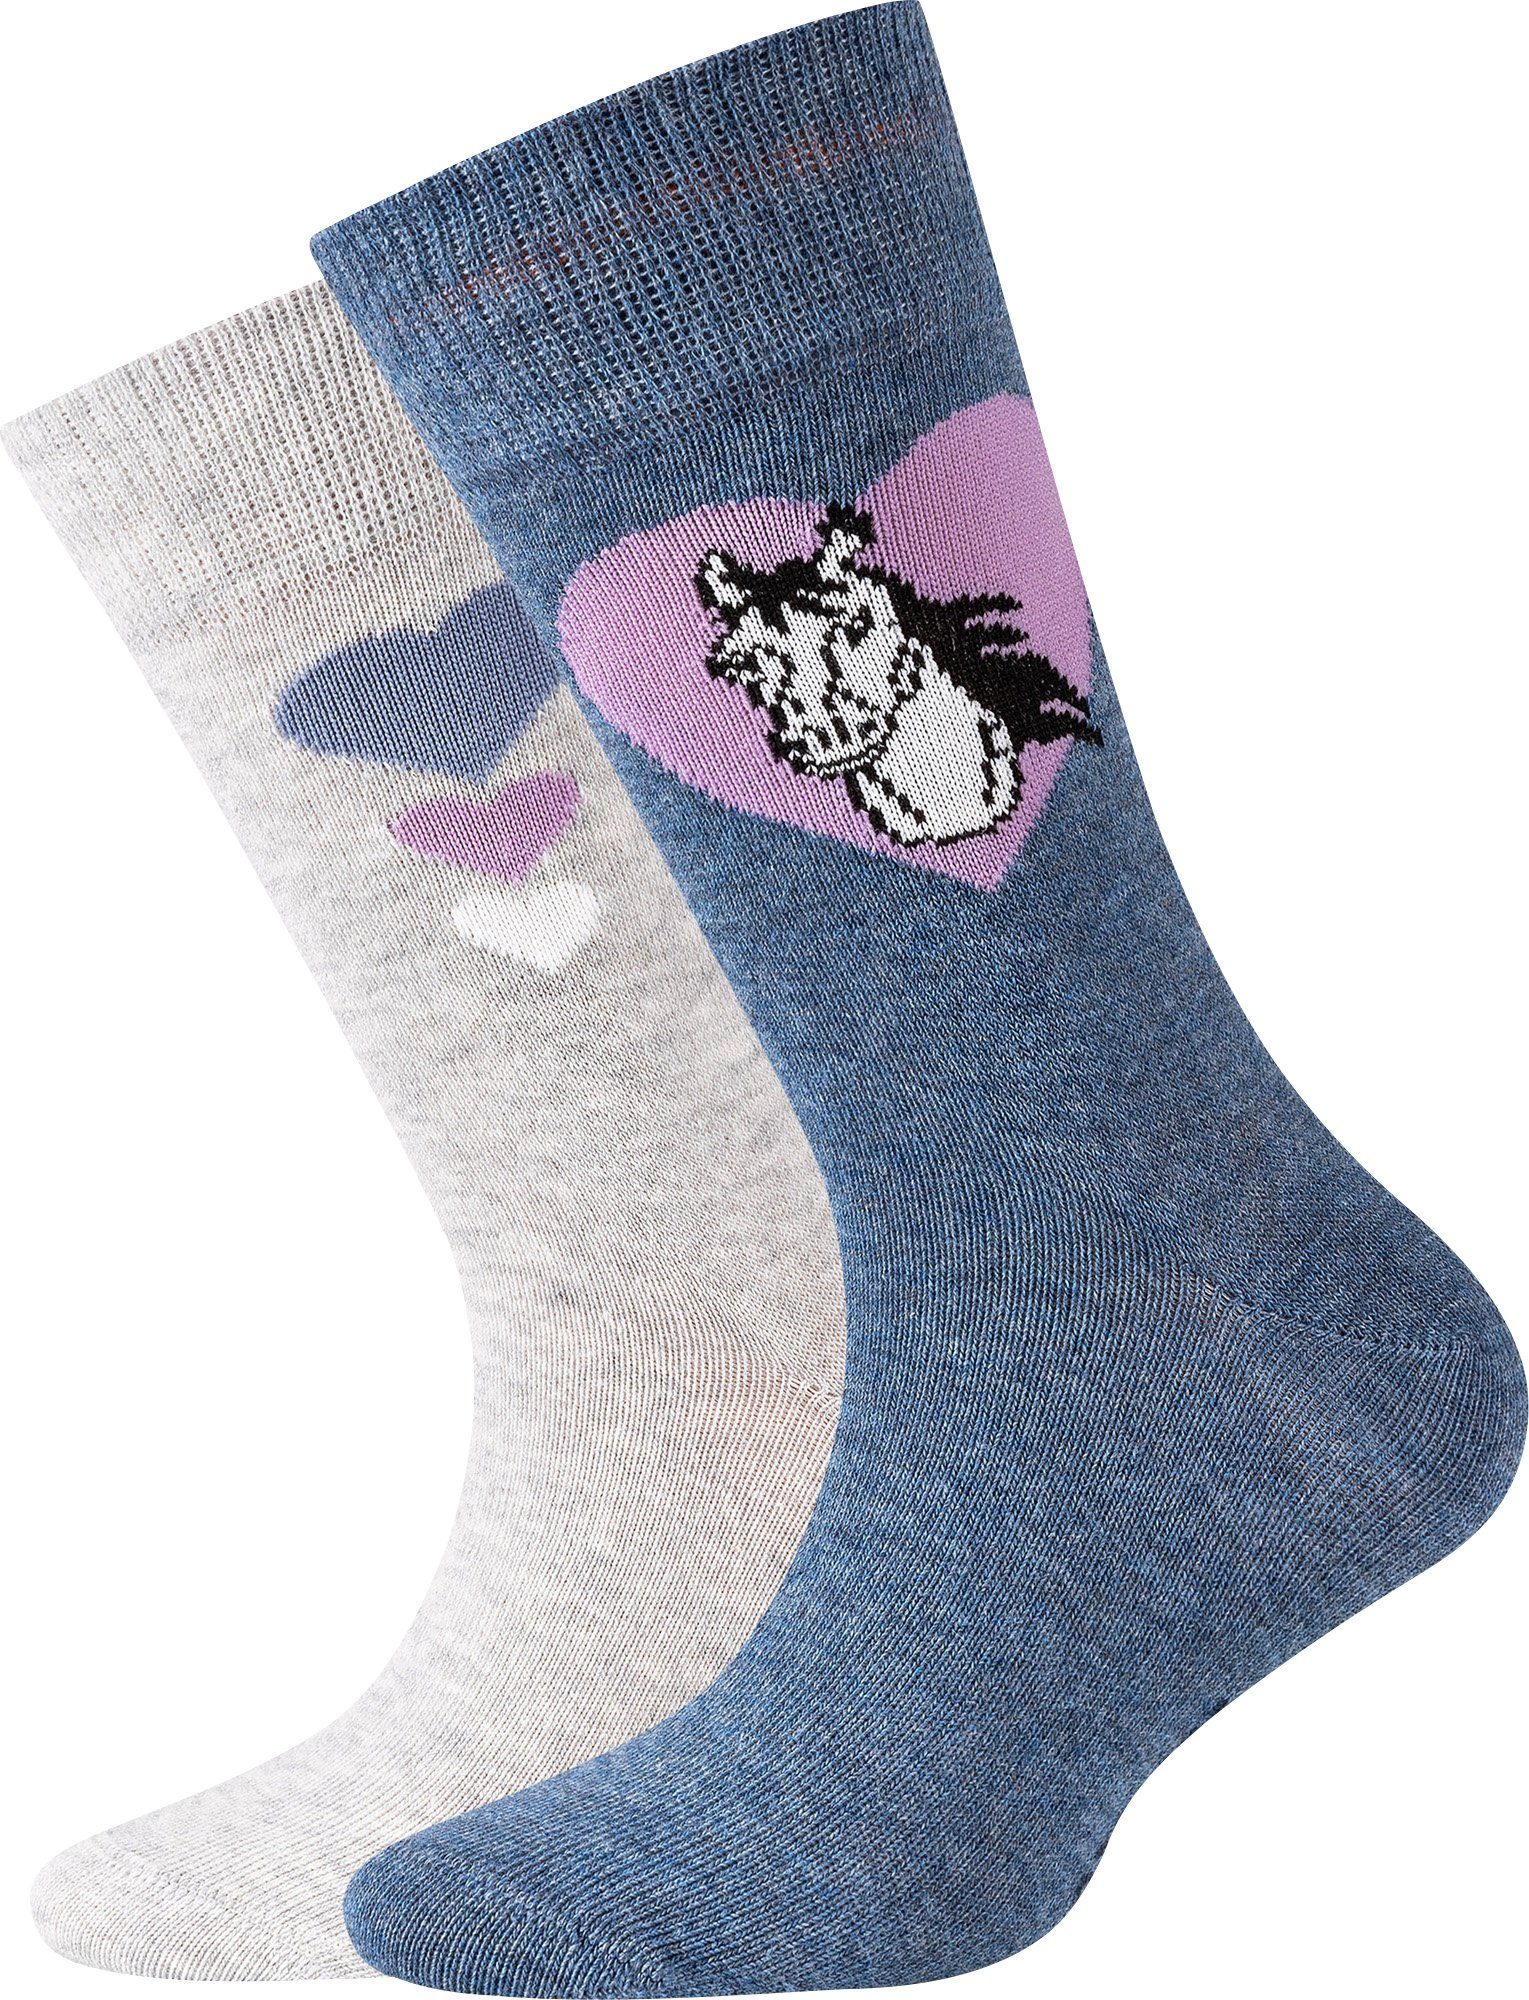 Camano Socken Kinder-Socken jeansblau/hellgrau Motiv: Herzen Pferd, meliert 2 Paar